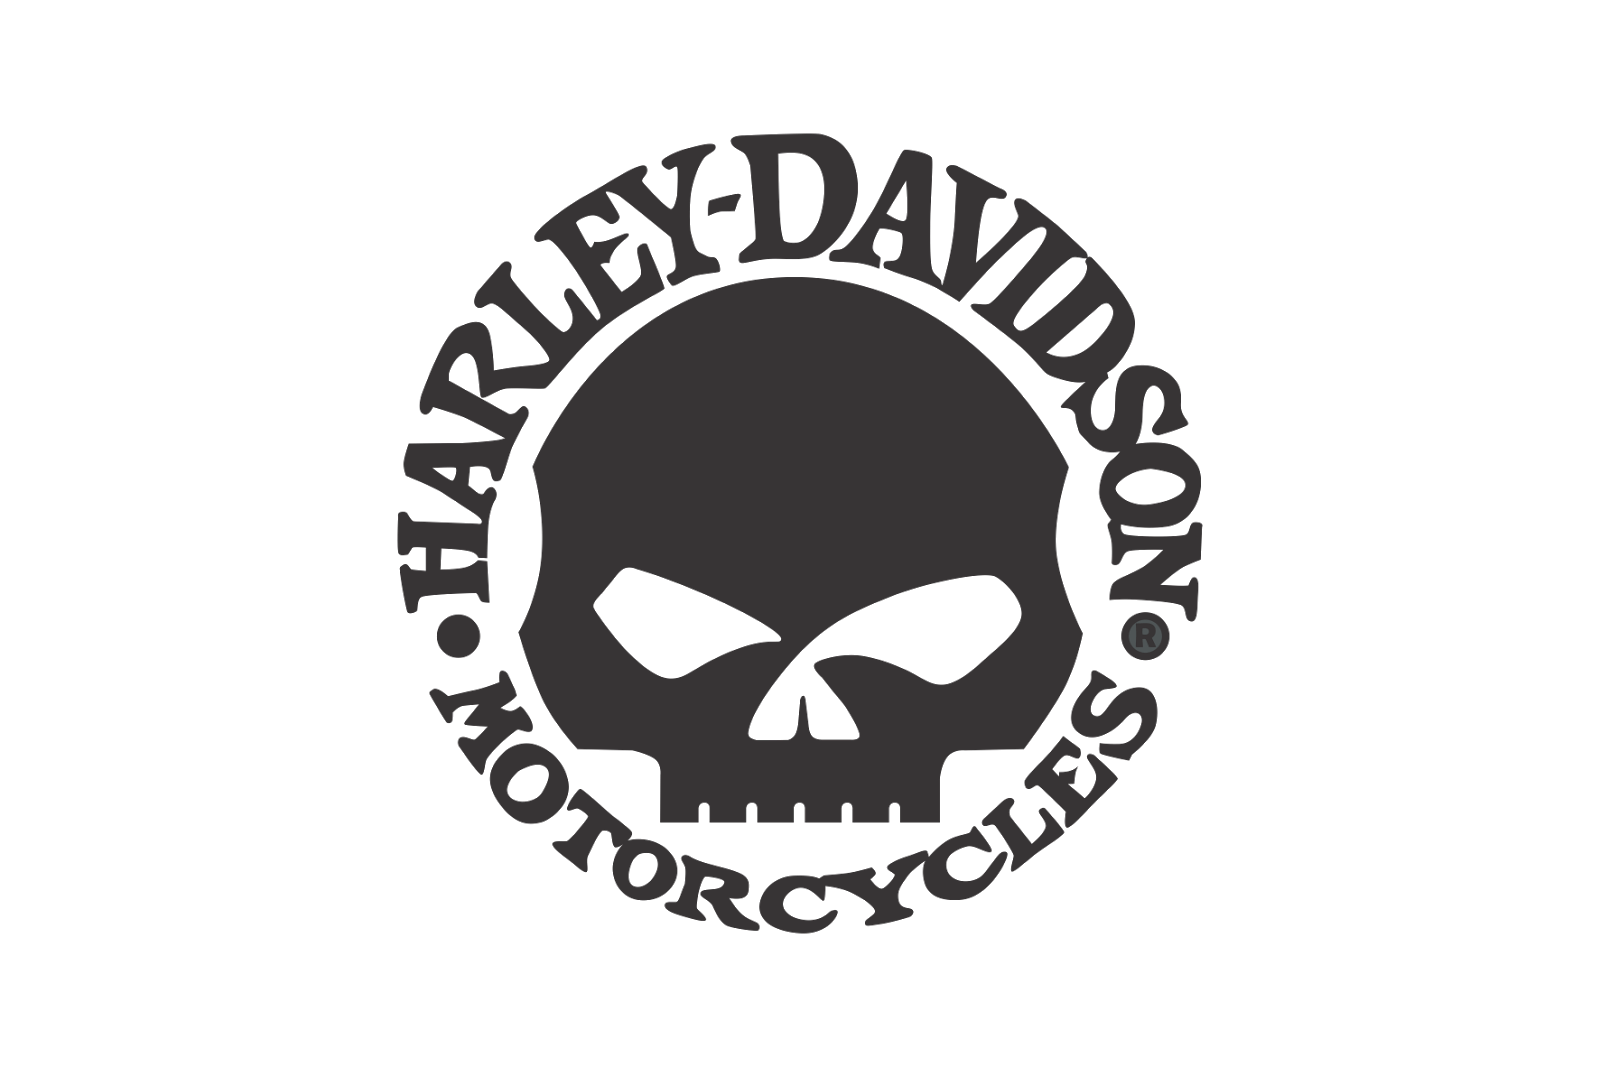 Harley-Davidson Skull Logo - Harley davidson skull Logos